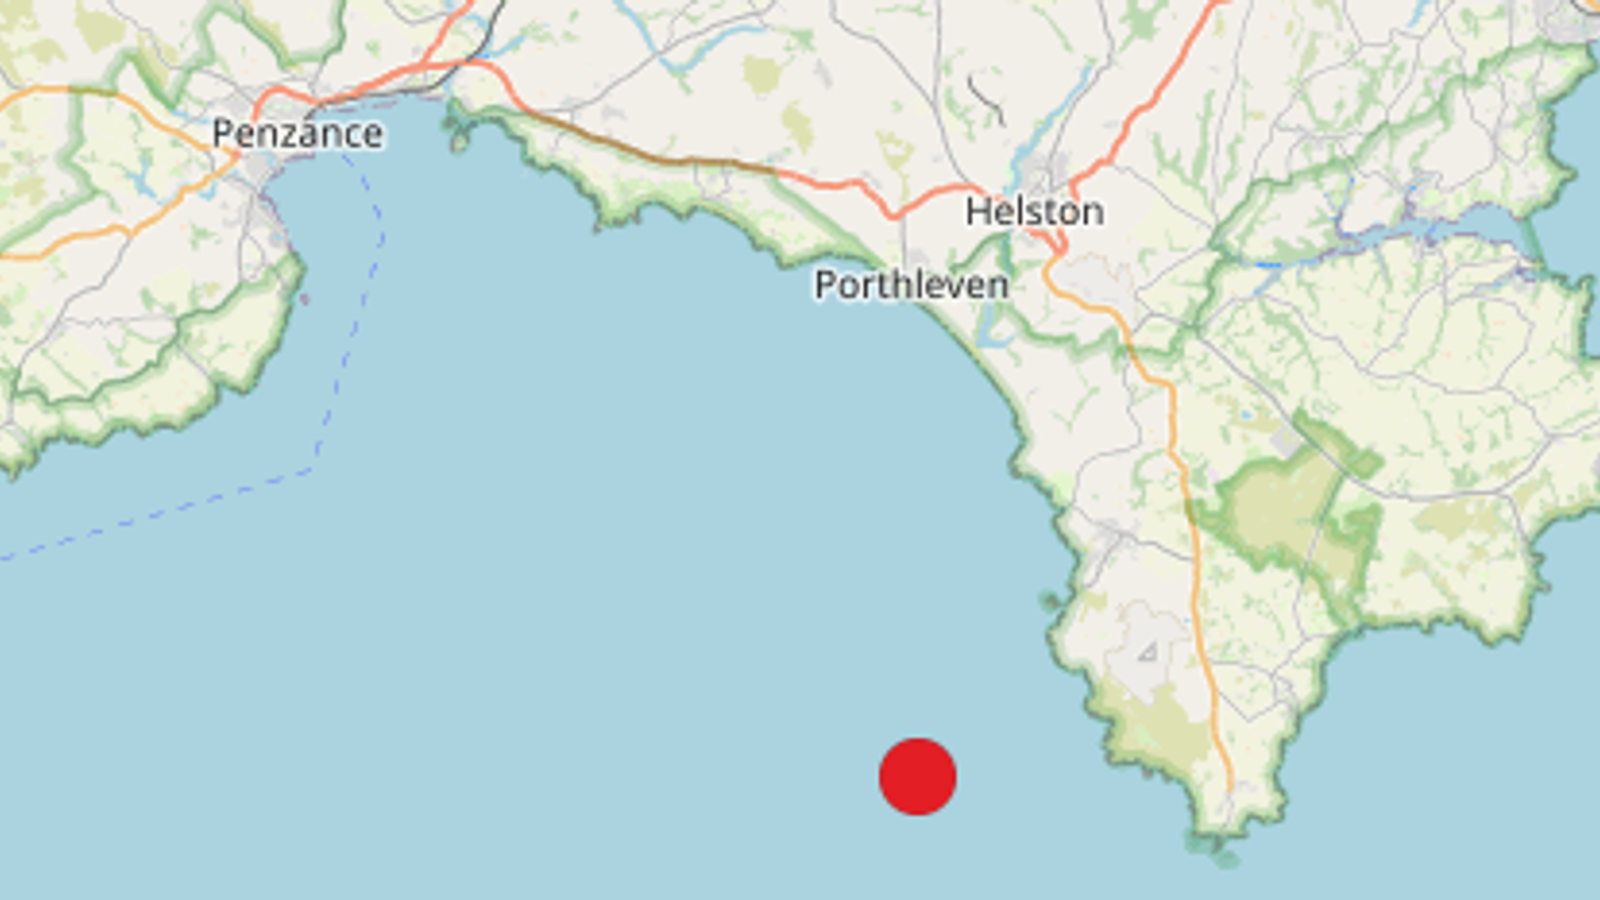 Cornwall hit by 2.7-magnitude earthquake that 'felt like a juggernaut had hit the house' | UK News | Sky News